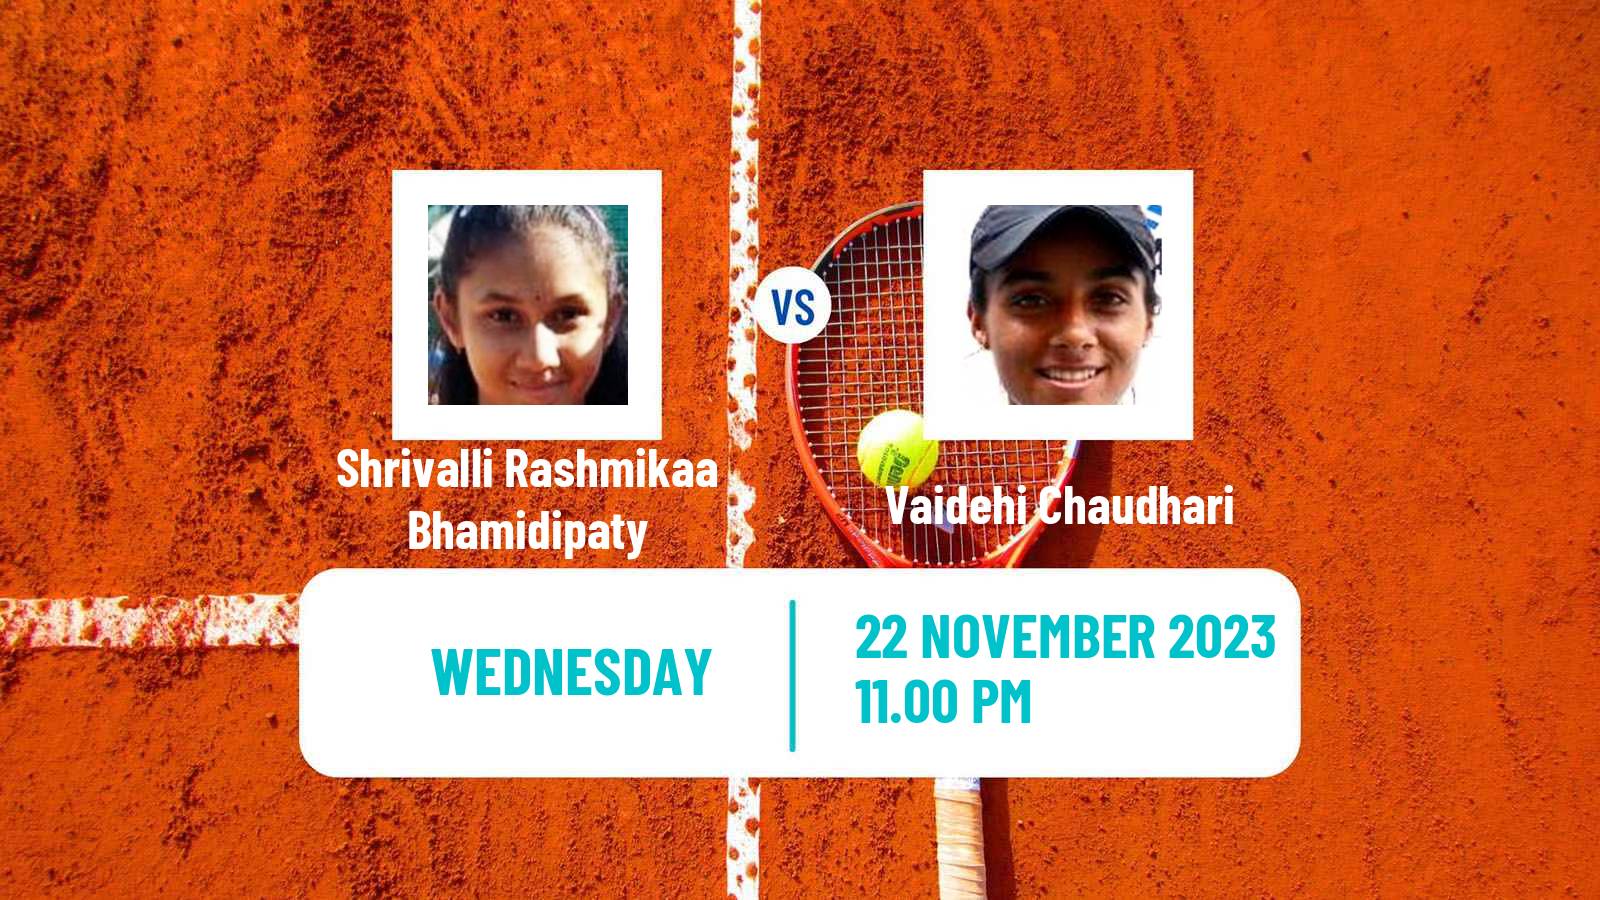 Tennis ITF W25 Bengaluru 2 Women Shrivalli Rashmikaa Bhamidipaty - Vaidehi Chaudhari